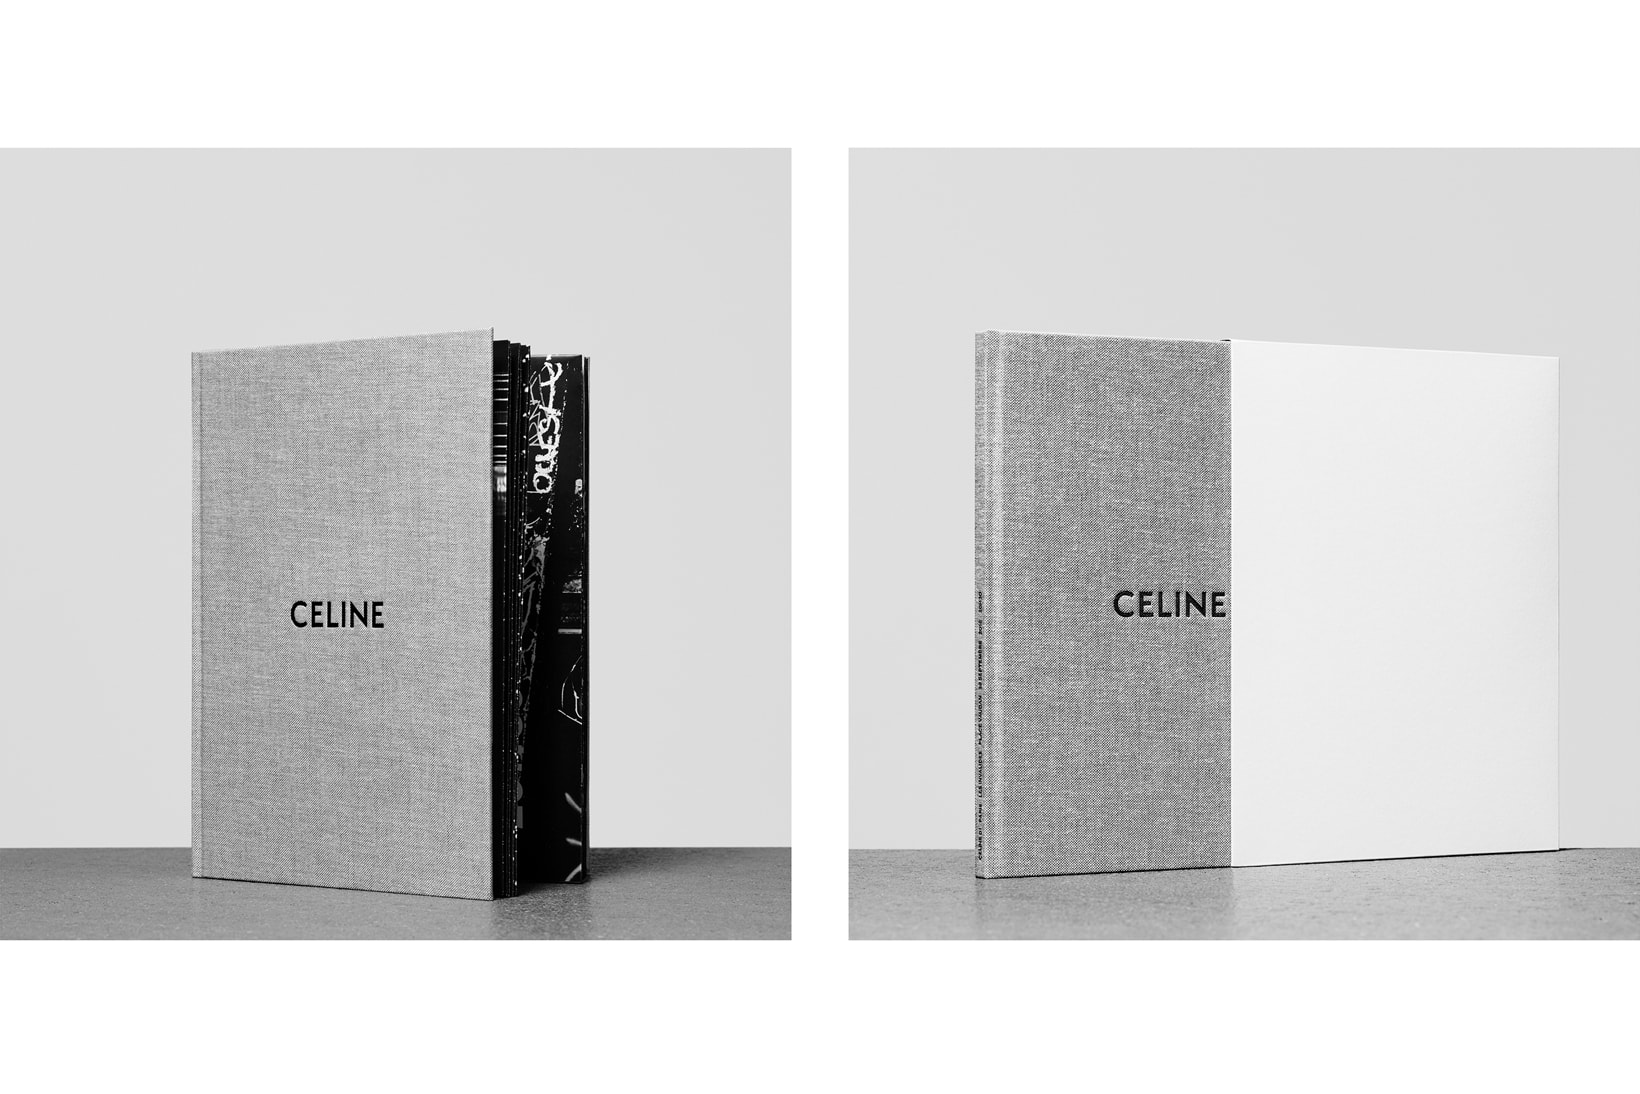 Celine Spring/Summer 2019 Show Invitation Book